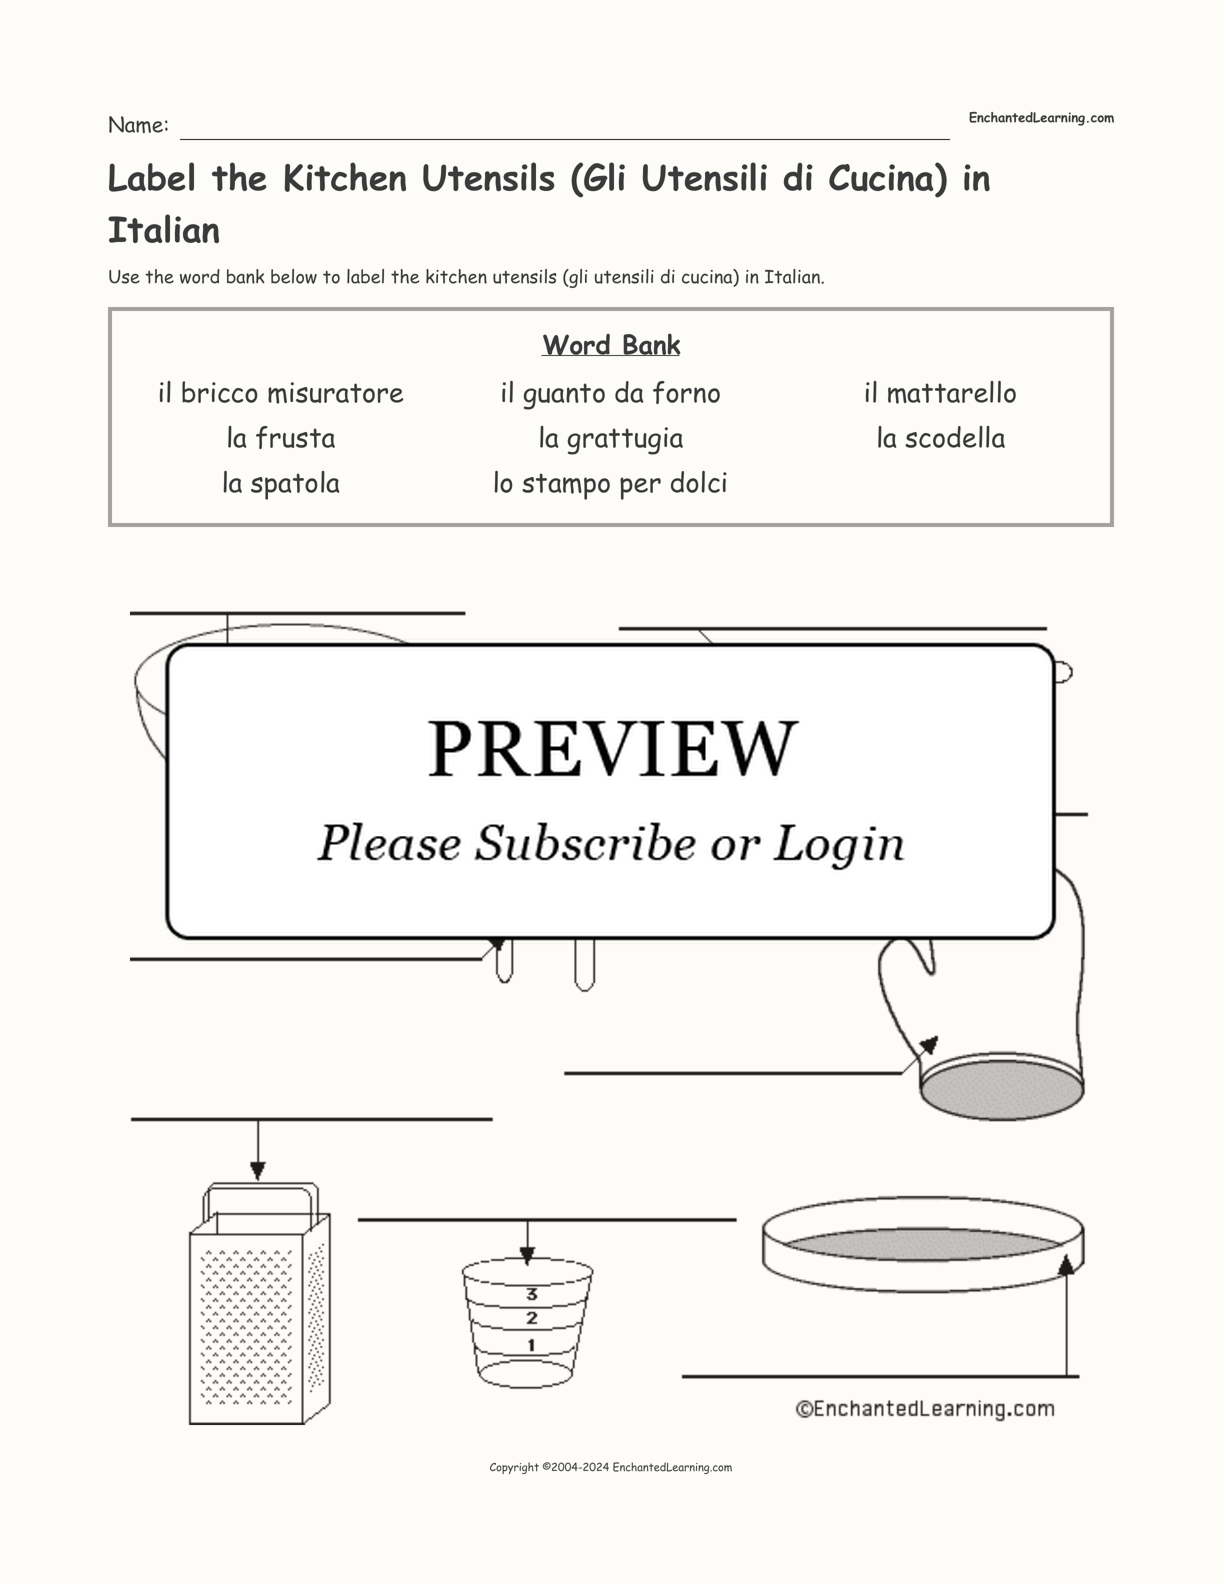 Label the Kitchen Utensils (Gli Utensili di Cucina) in Italian interactive worksheet page 1